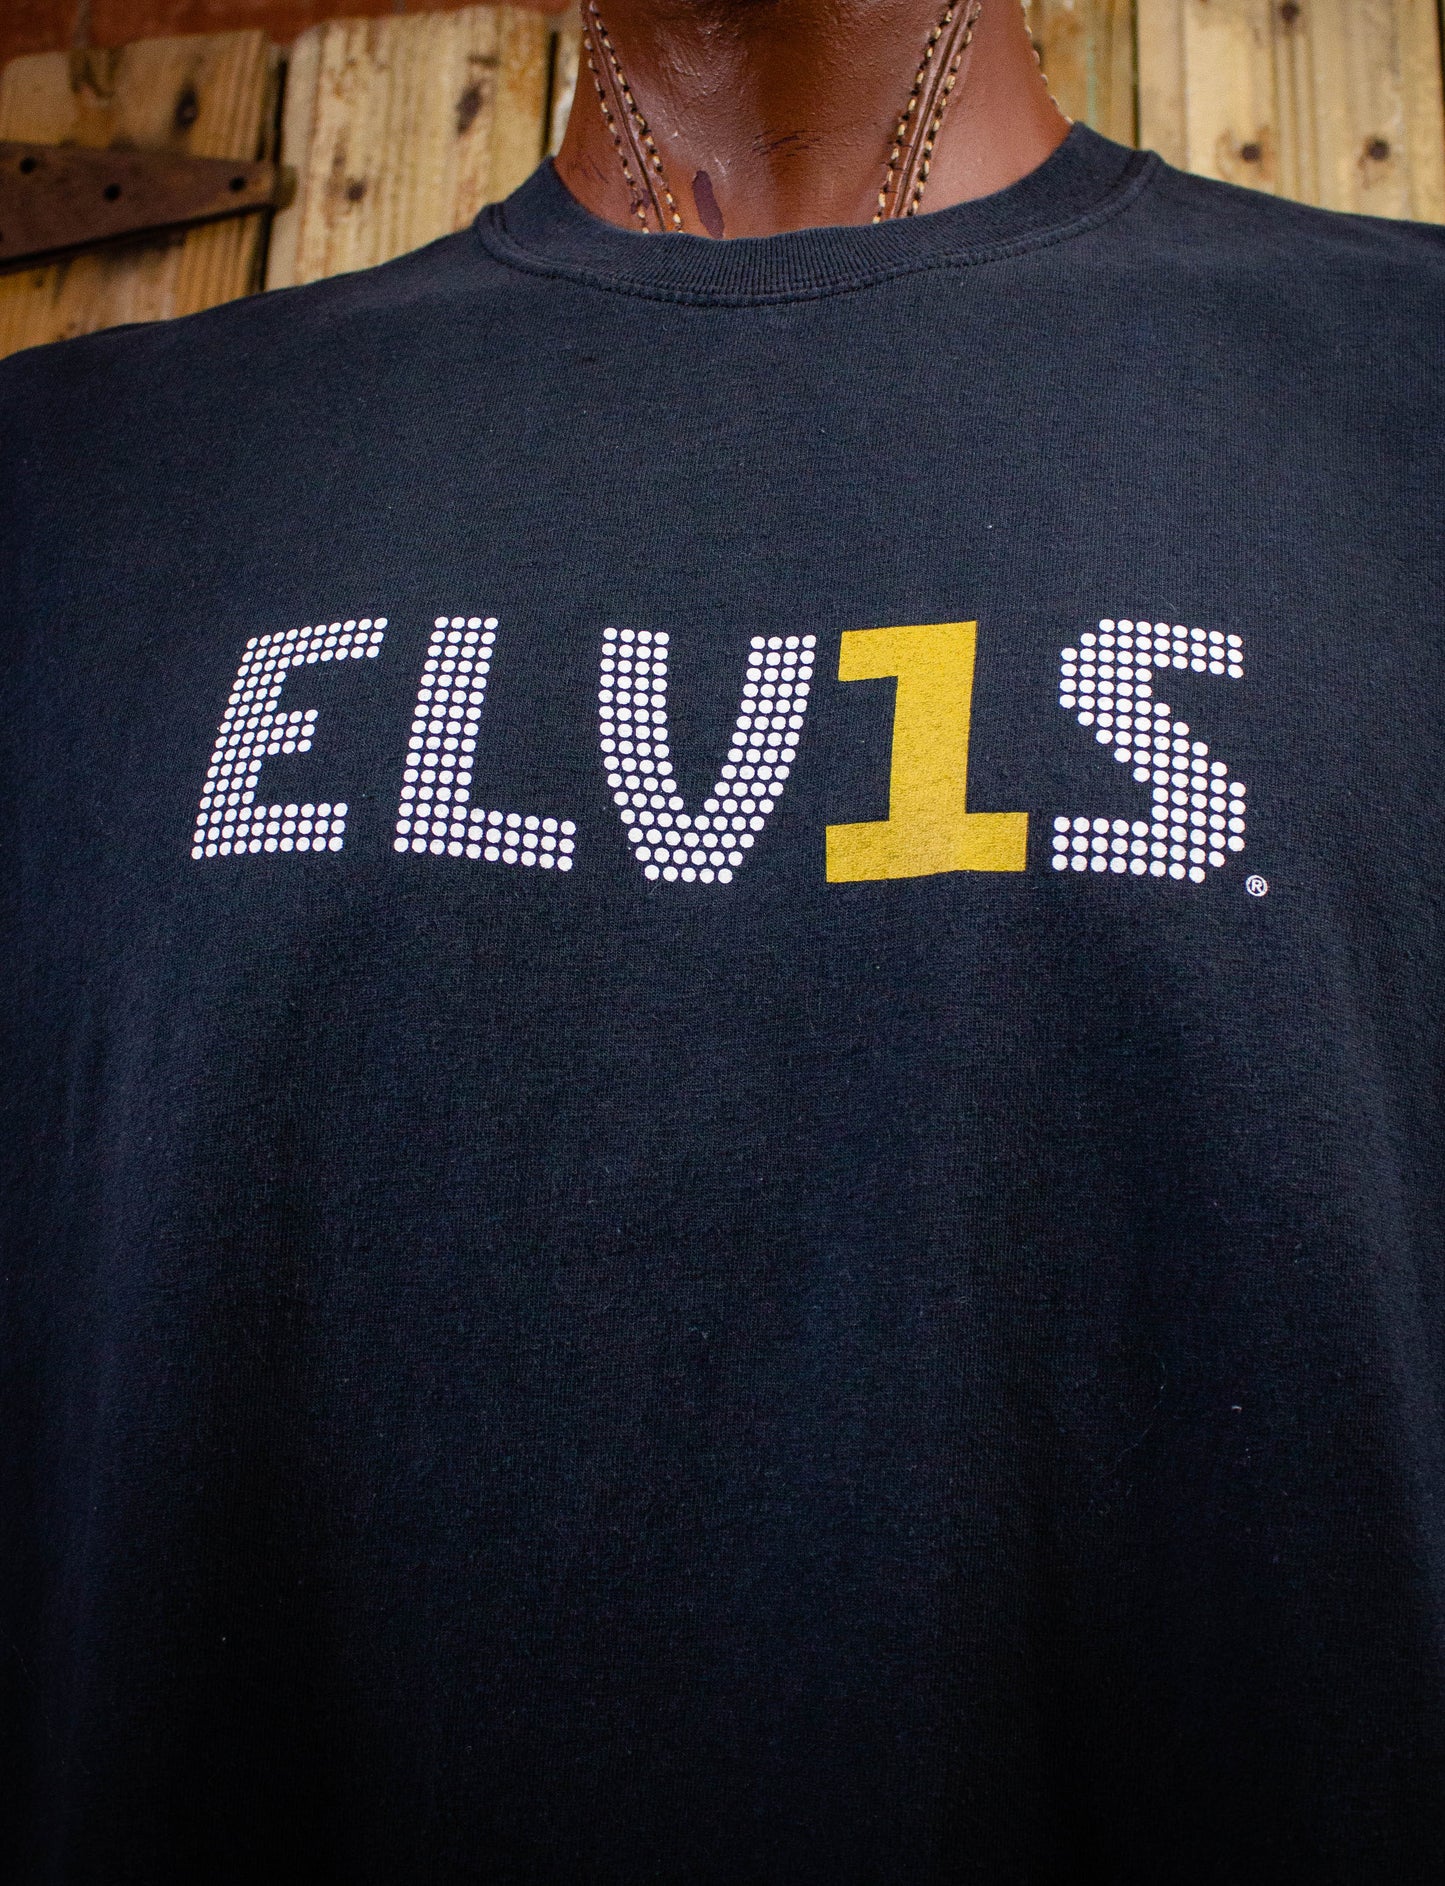 Vintage Elvis Presley 30 #1 Hits Promo T Shirt 2002 Black XL